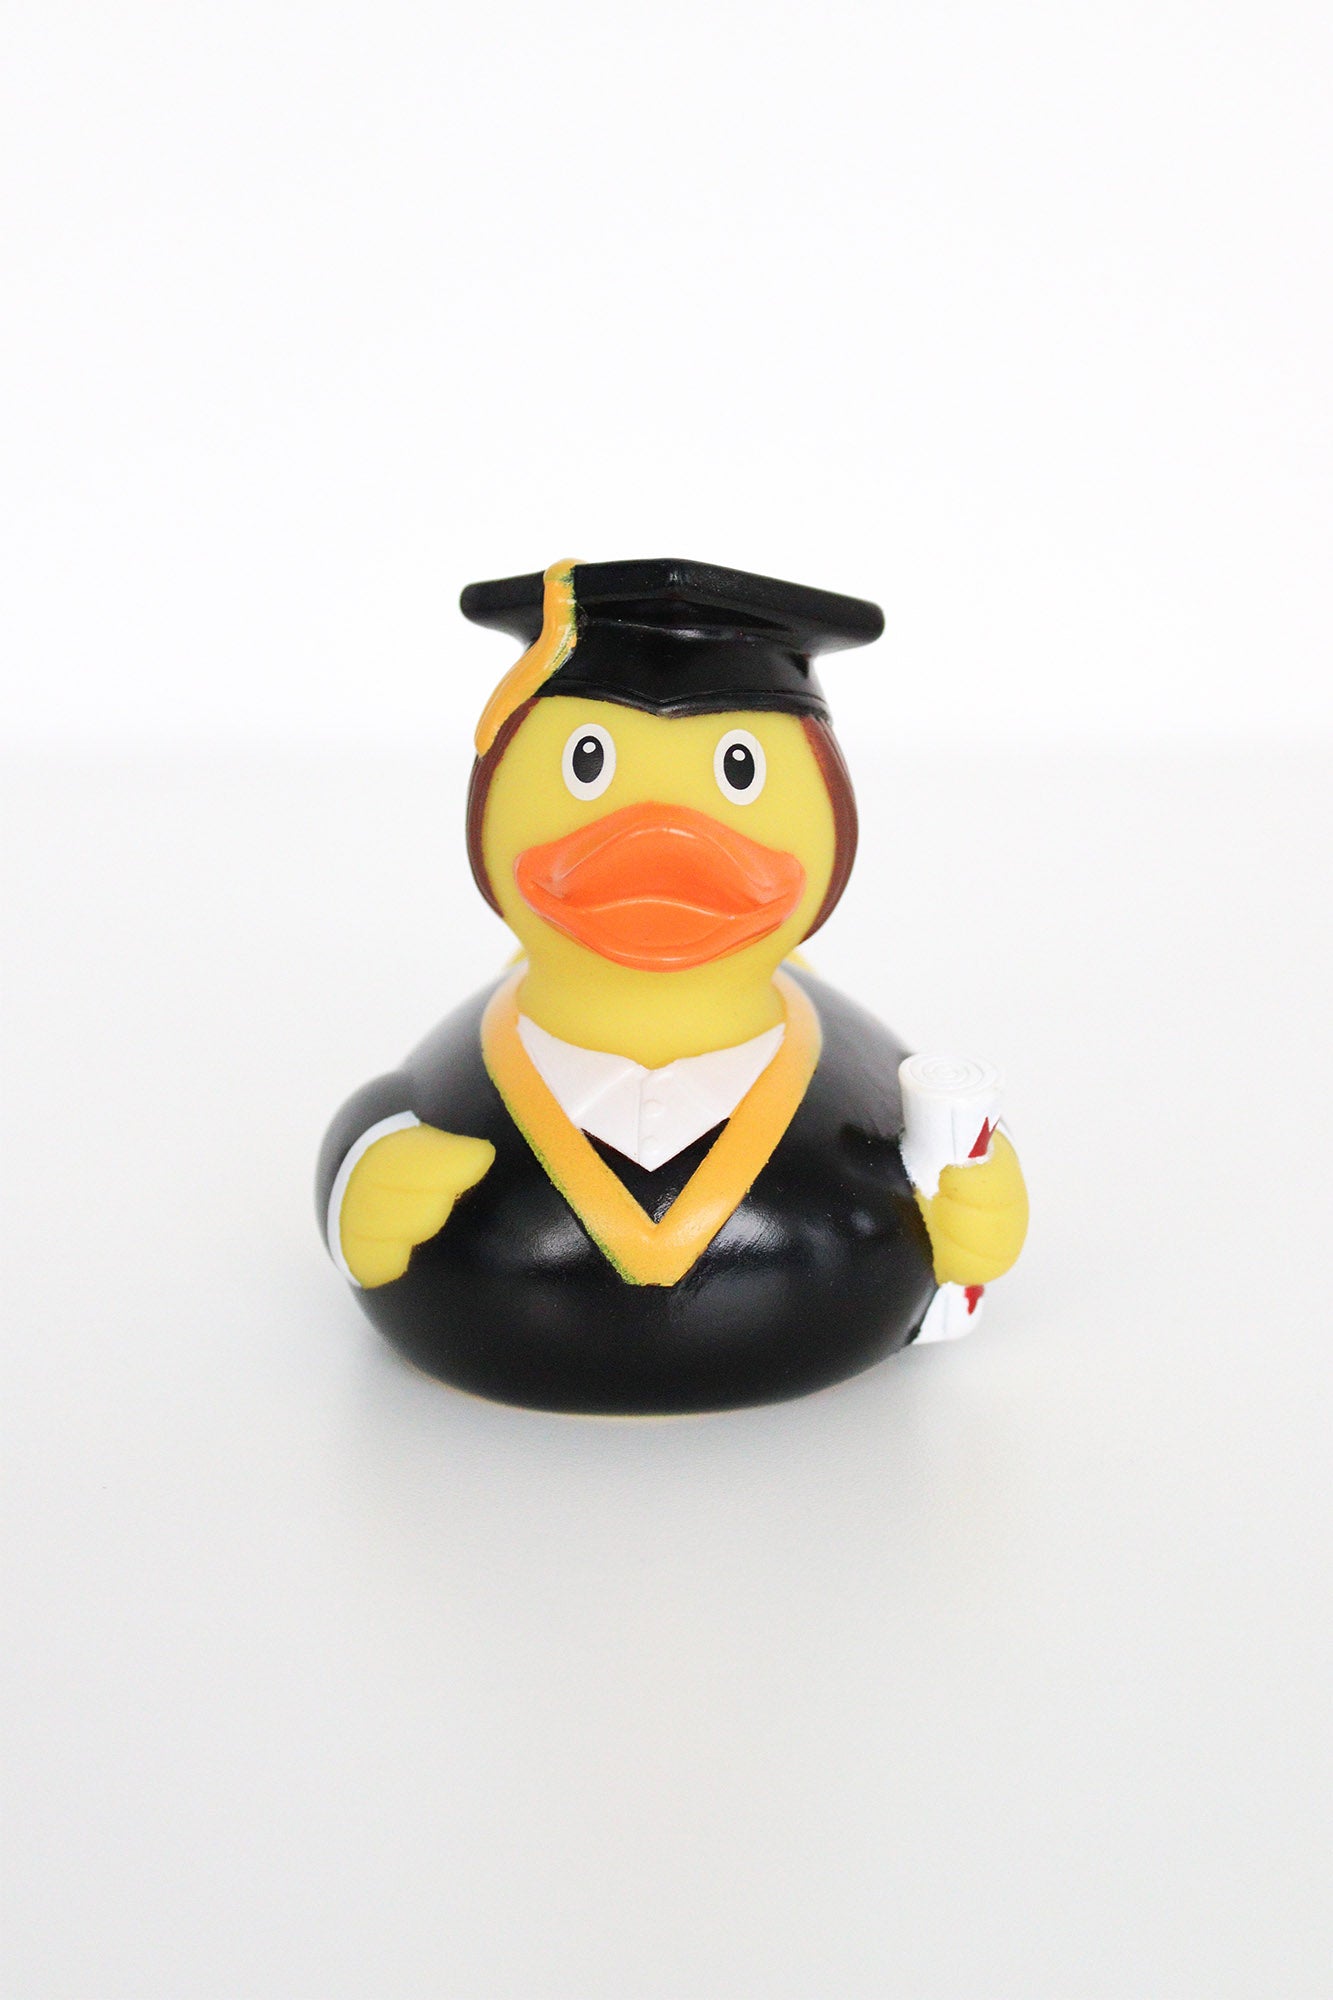 Graduation plastic duck toy